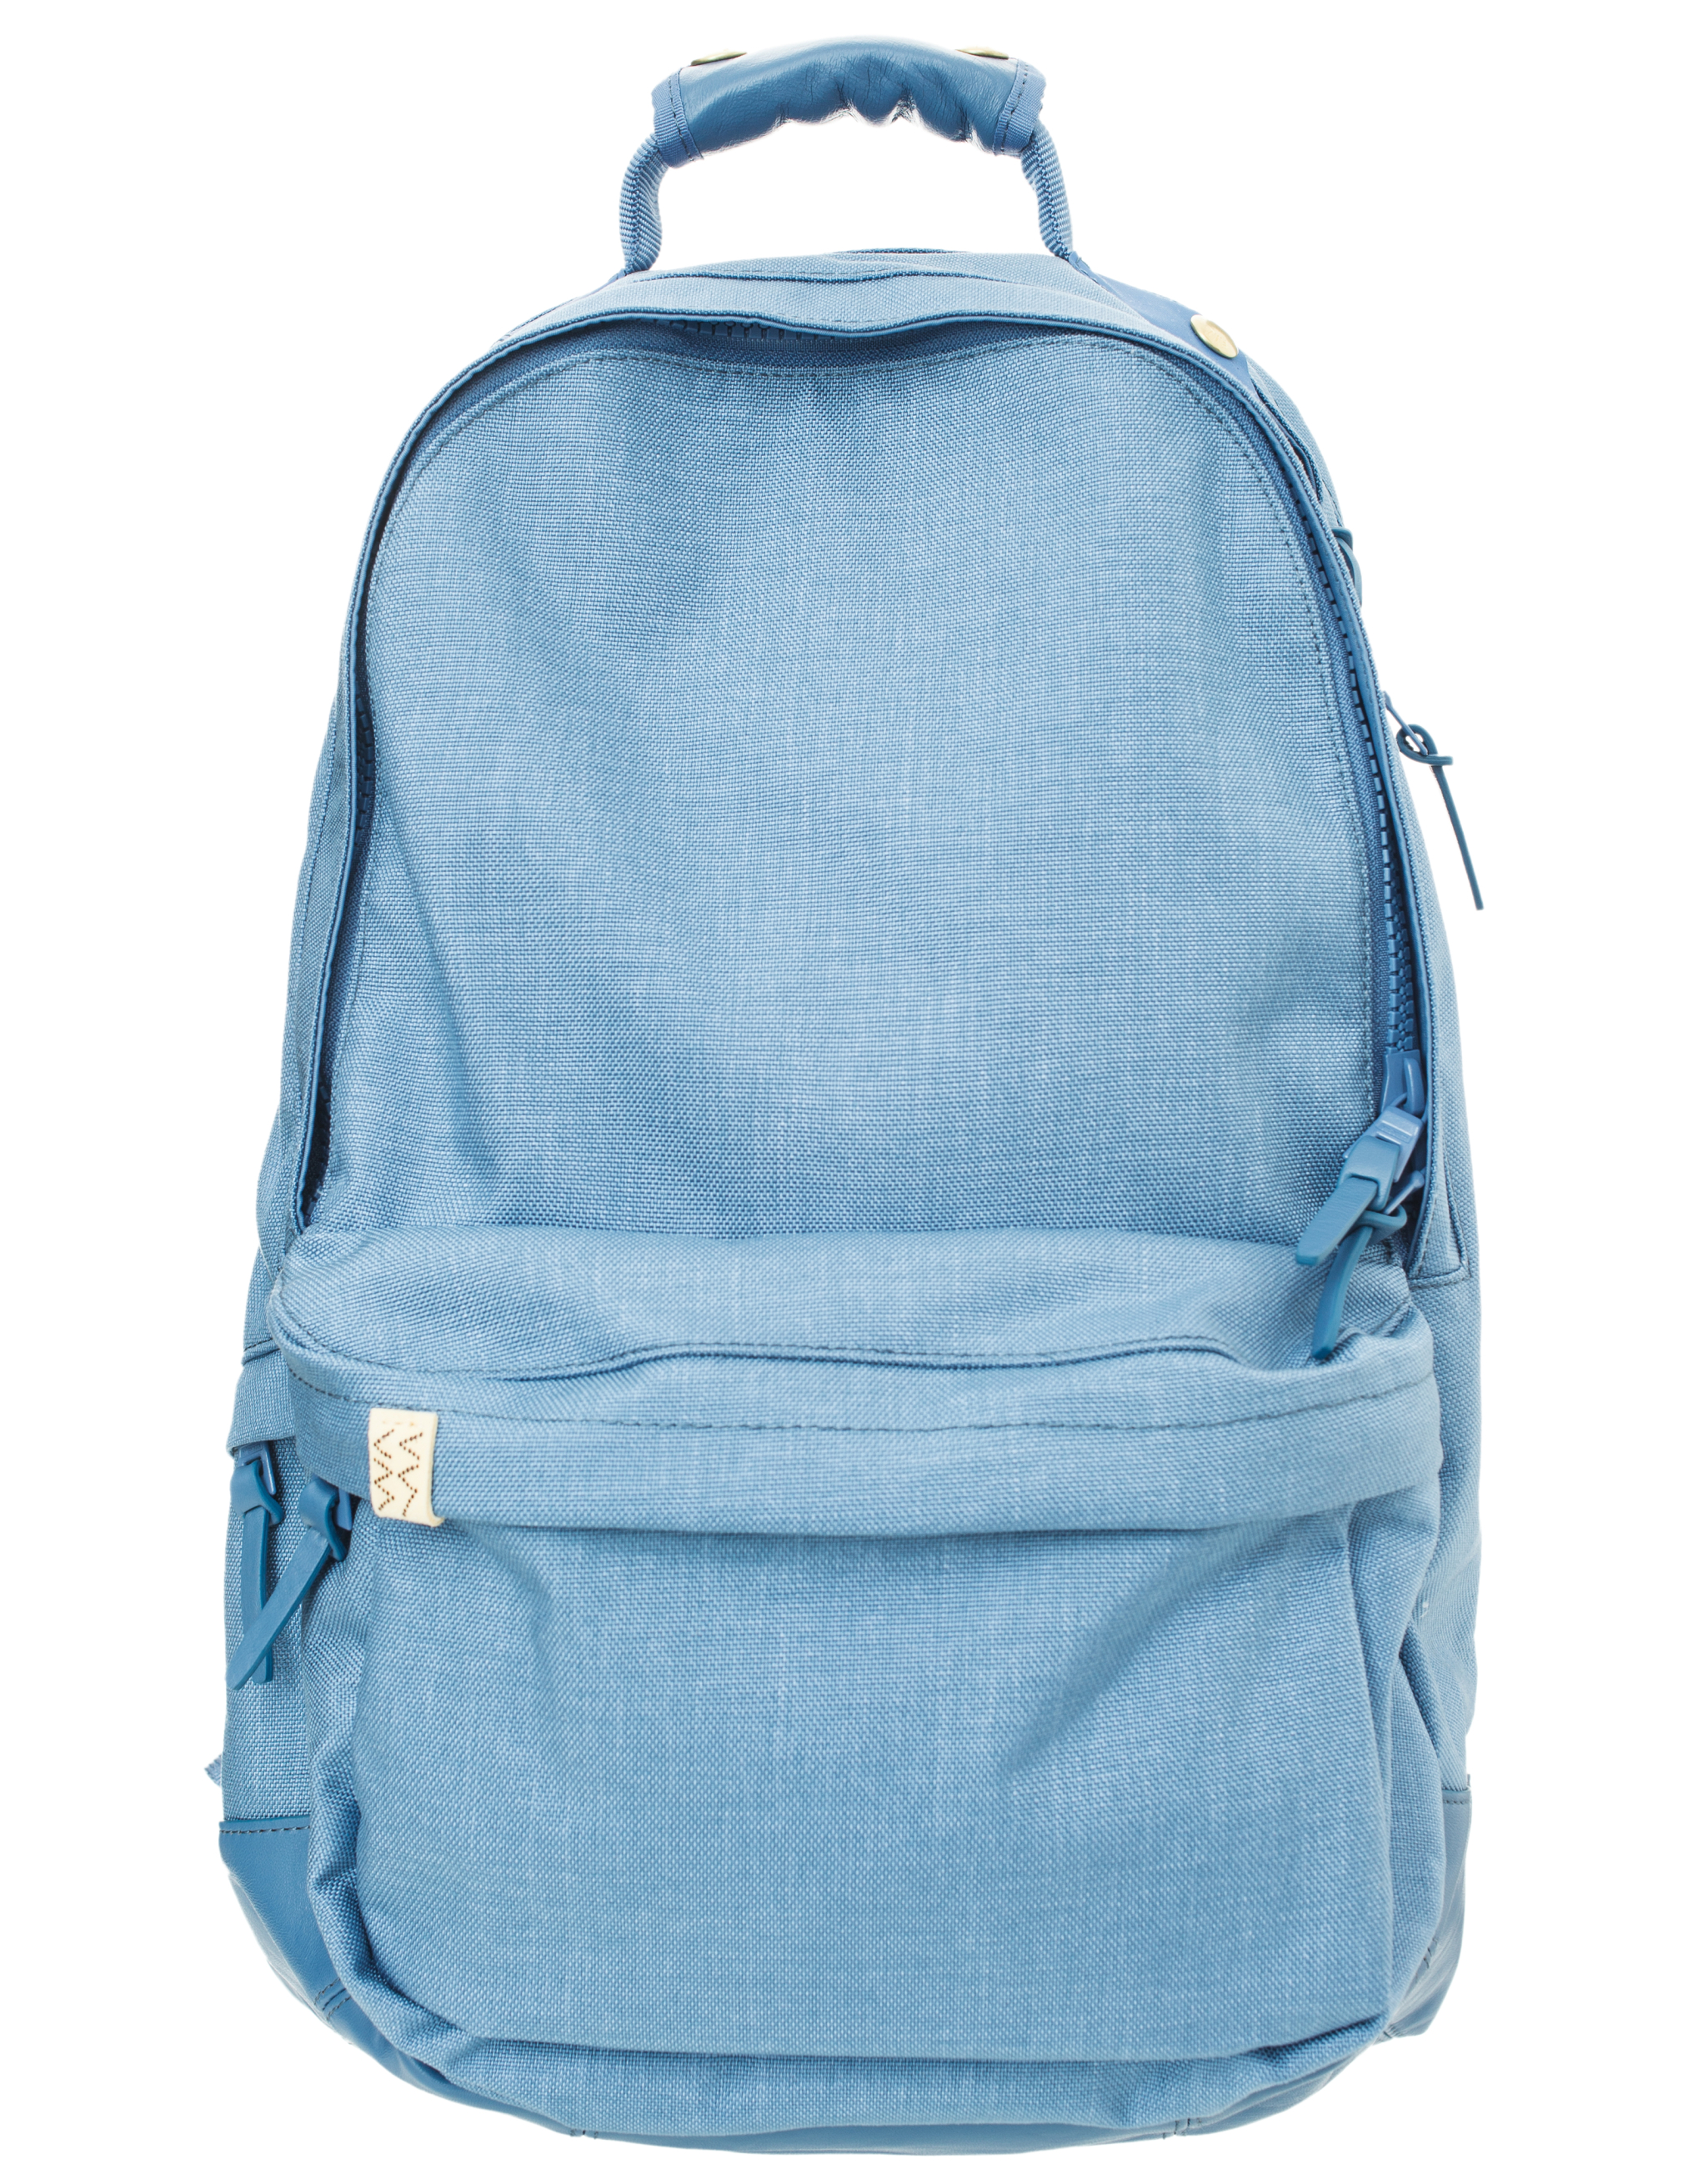 Синий рюкзак Cordura 22L visvim 0123103003032/BLUE, размер One Size